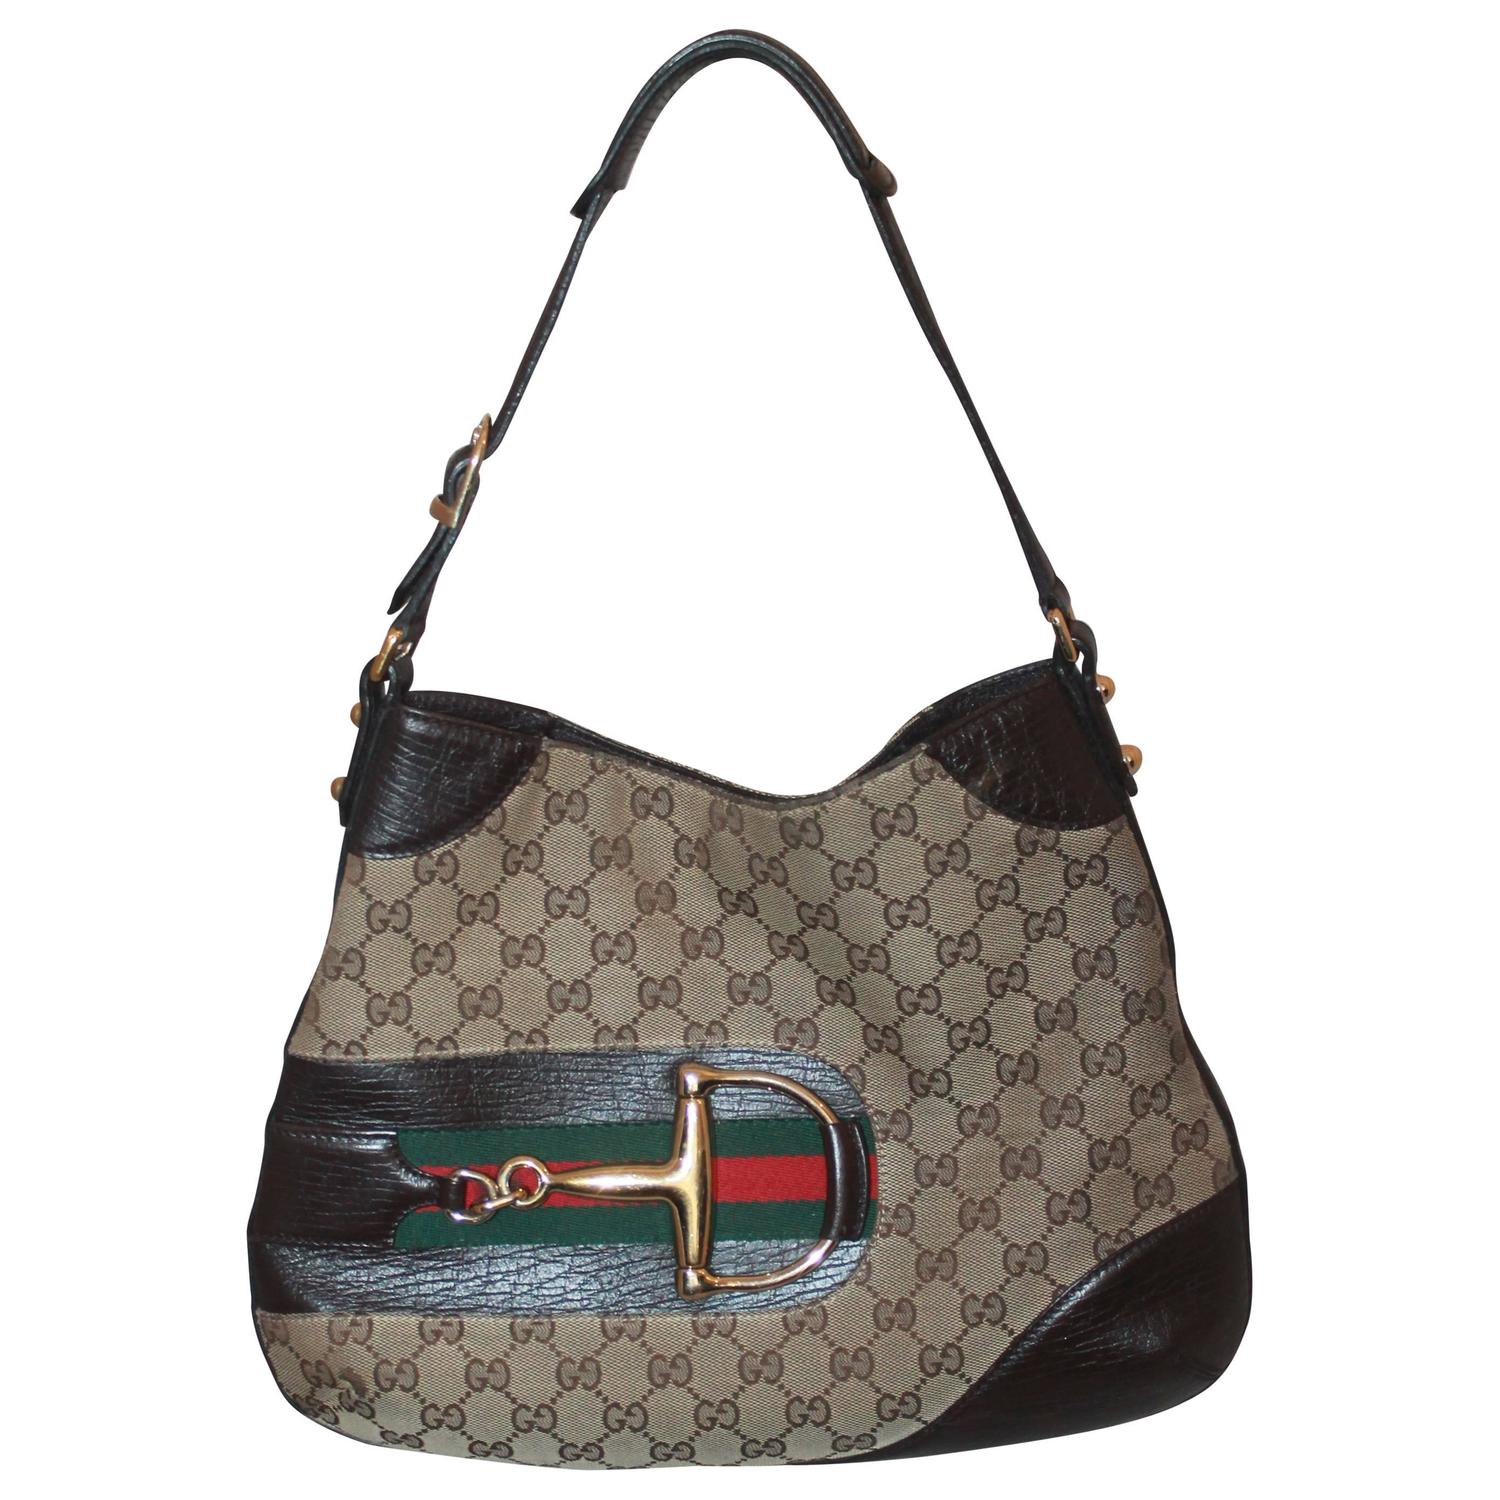 Gucci Brown Hasler Monogram Shoulder Bag w/ Horse Bit and Leather Trim - GHW For Sale at 1stdibs